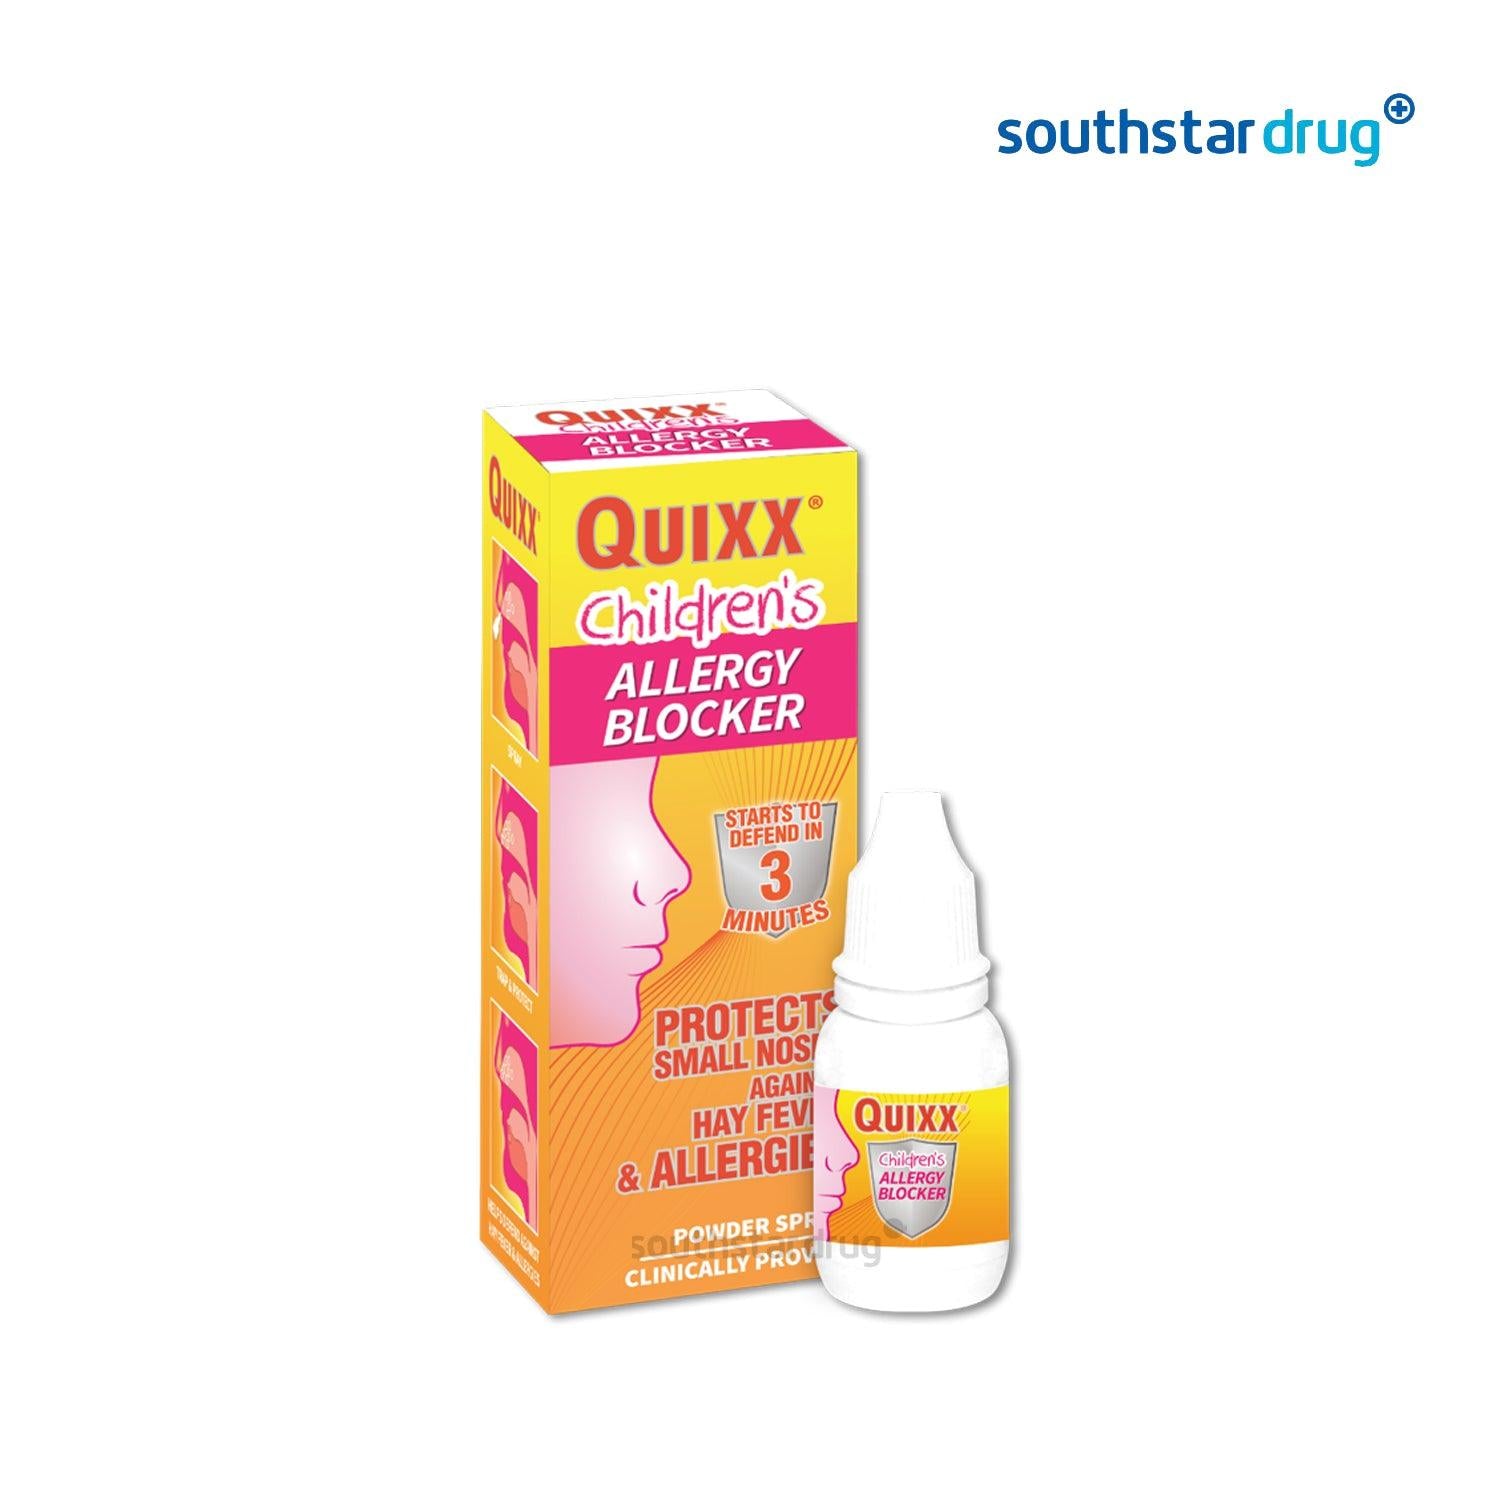 Buy Quixx Children's Allergy Blocker 800mg Online